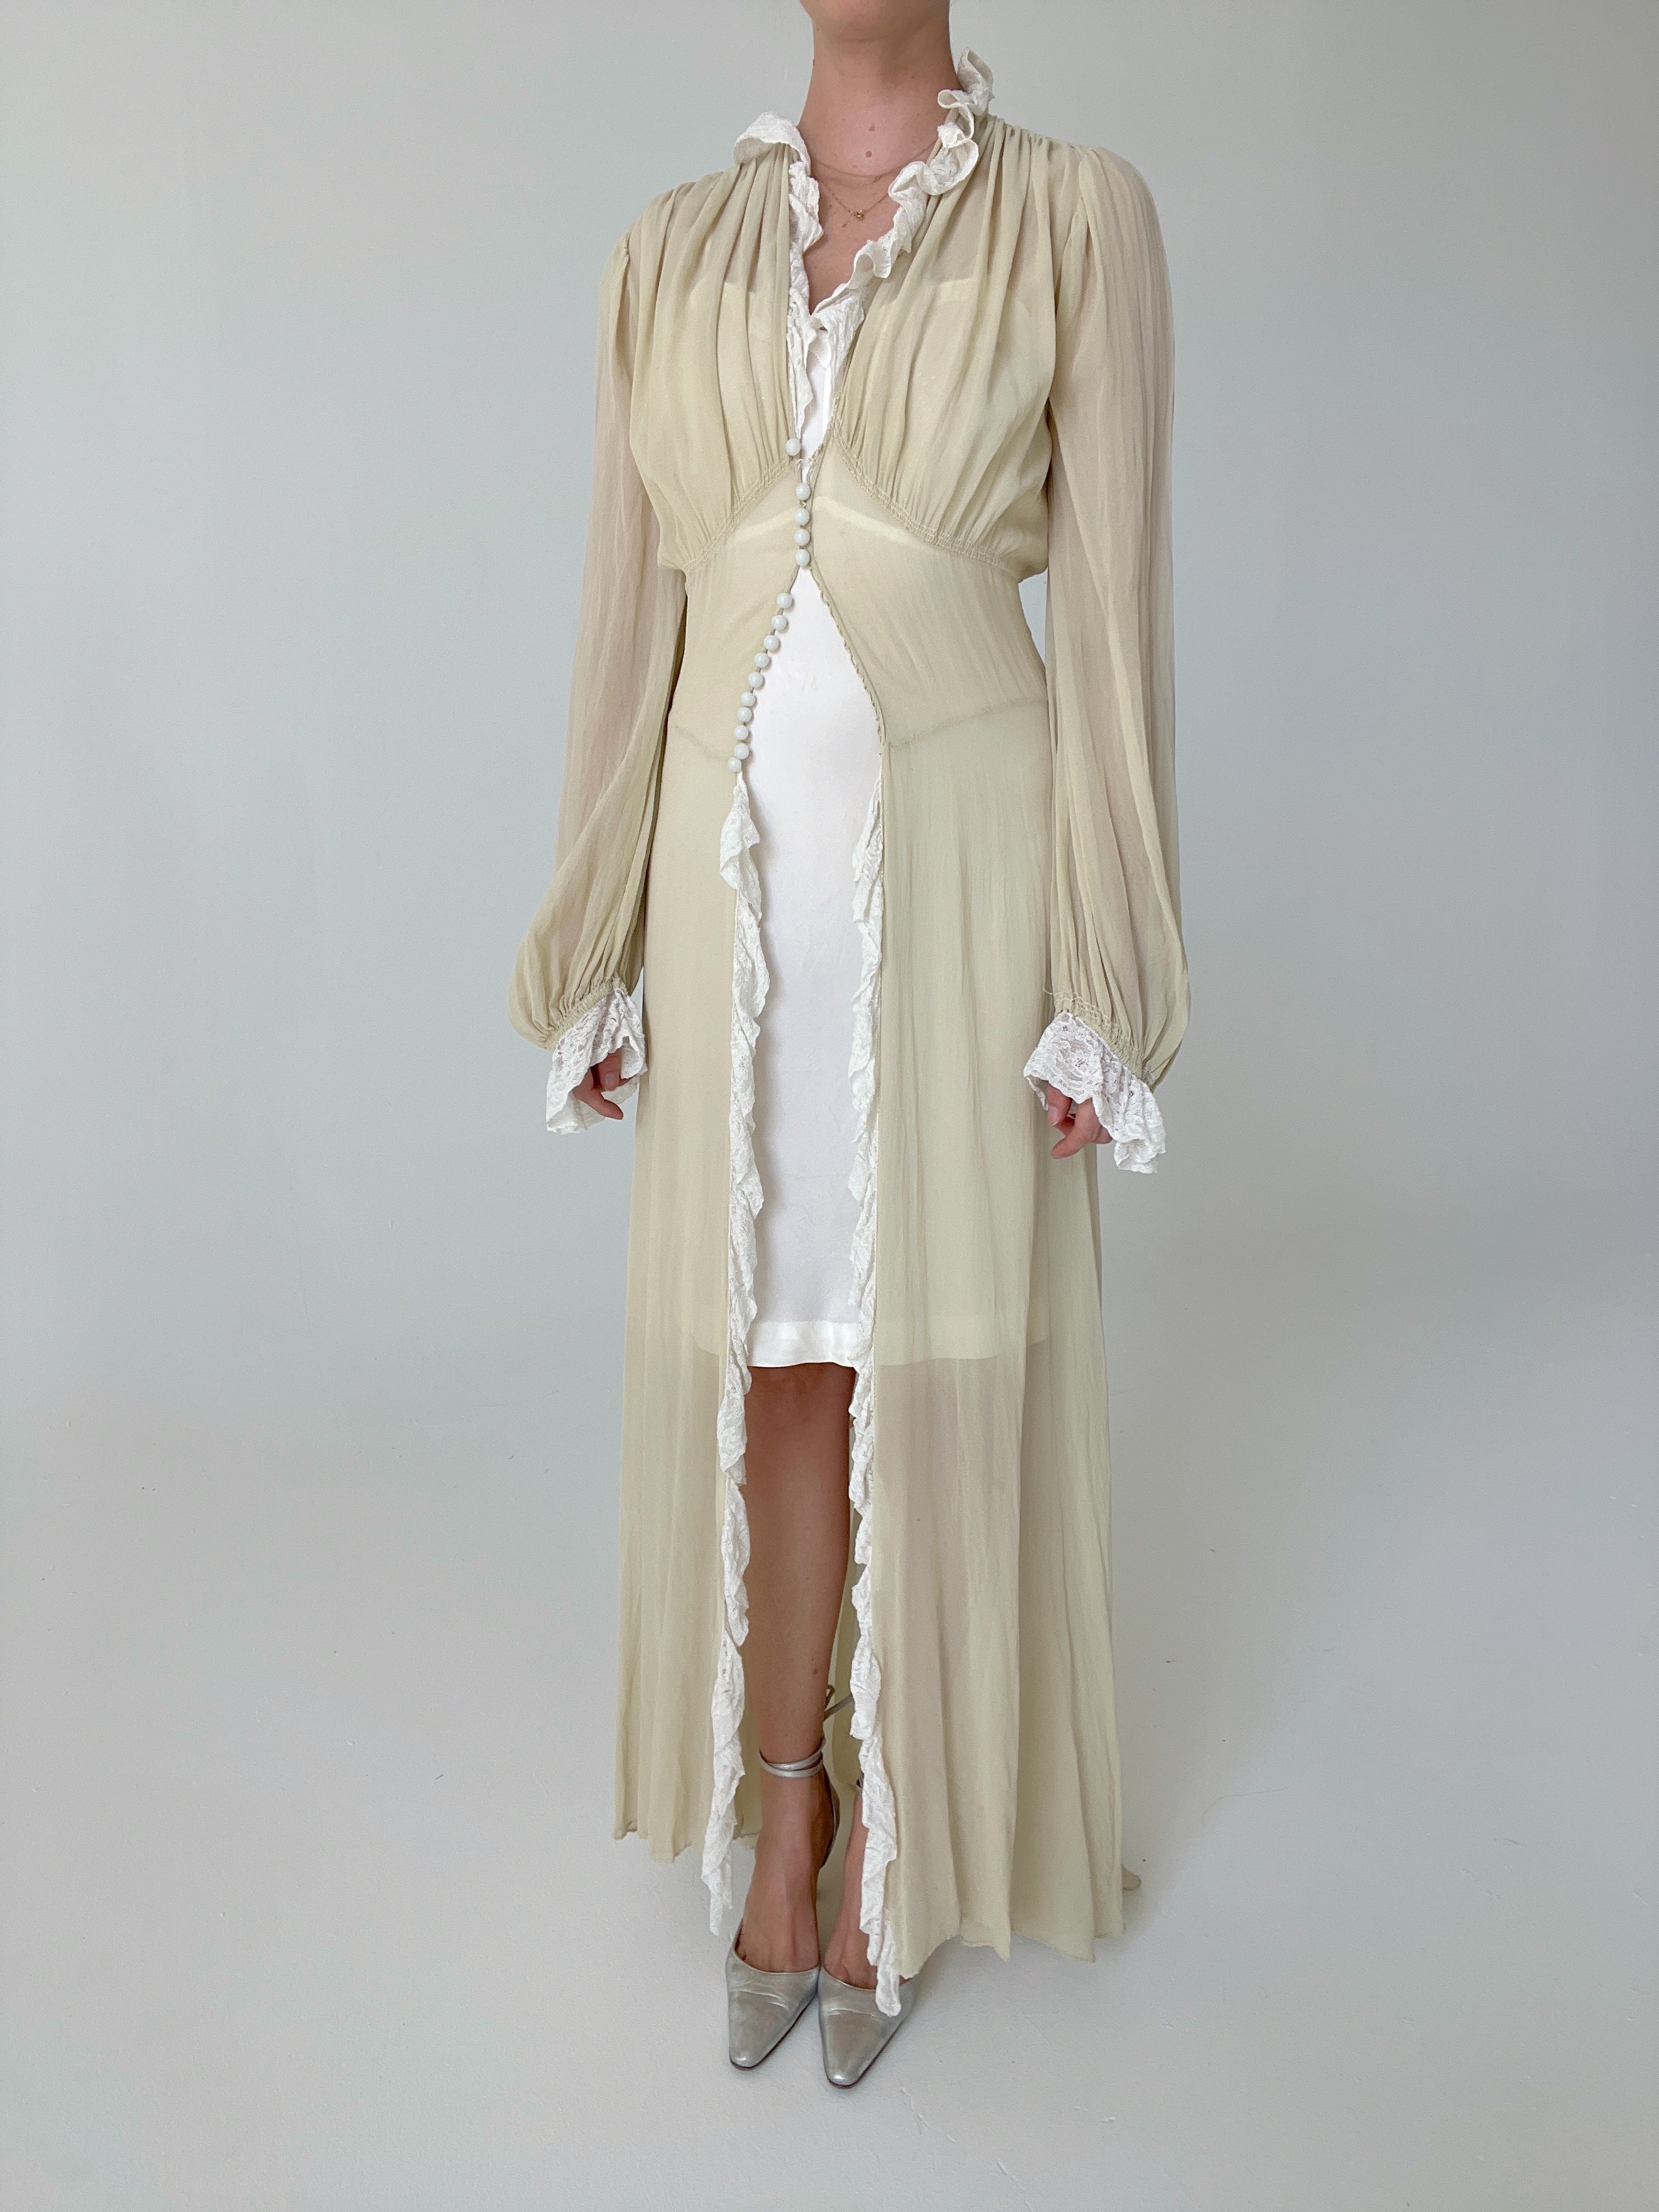 1930's Pale Vintage Cream Silk Chiffon Robe with White Lace